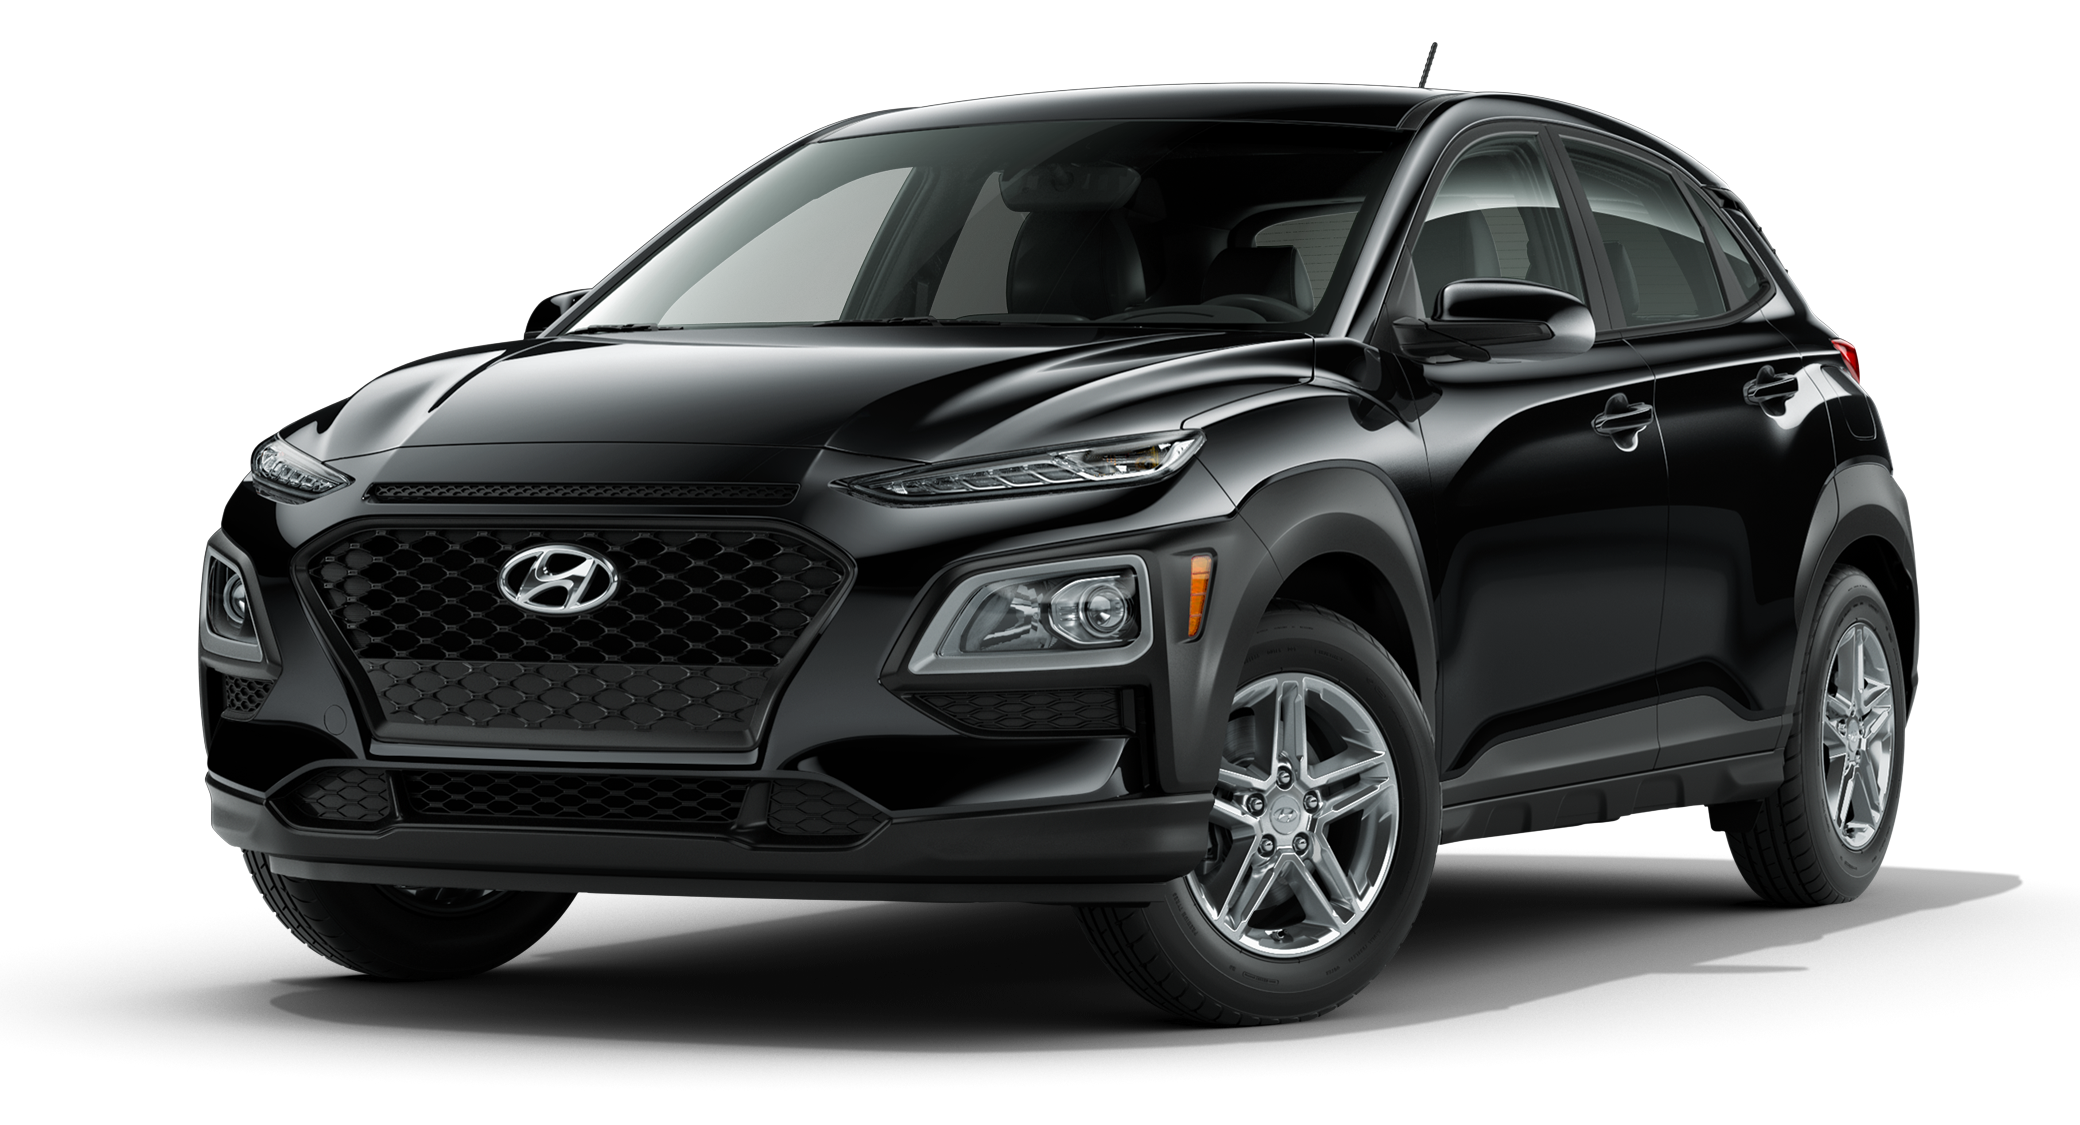 2018 Hyundai Kona Incentives, Specials & Offers in Auburn MA